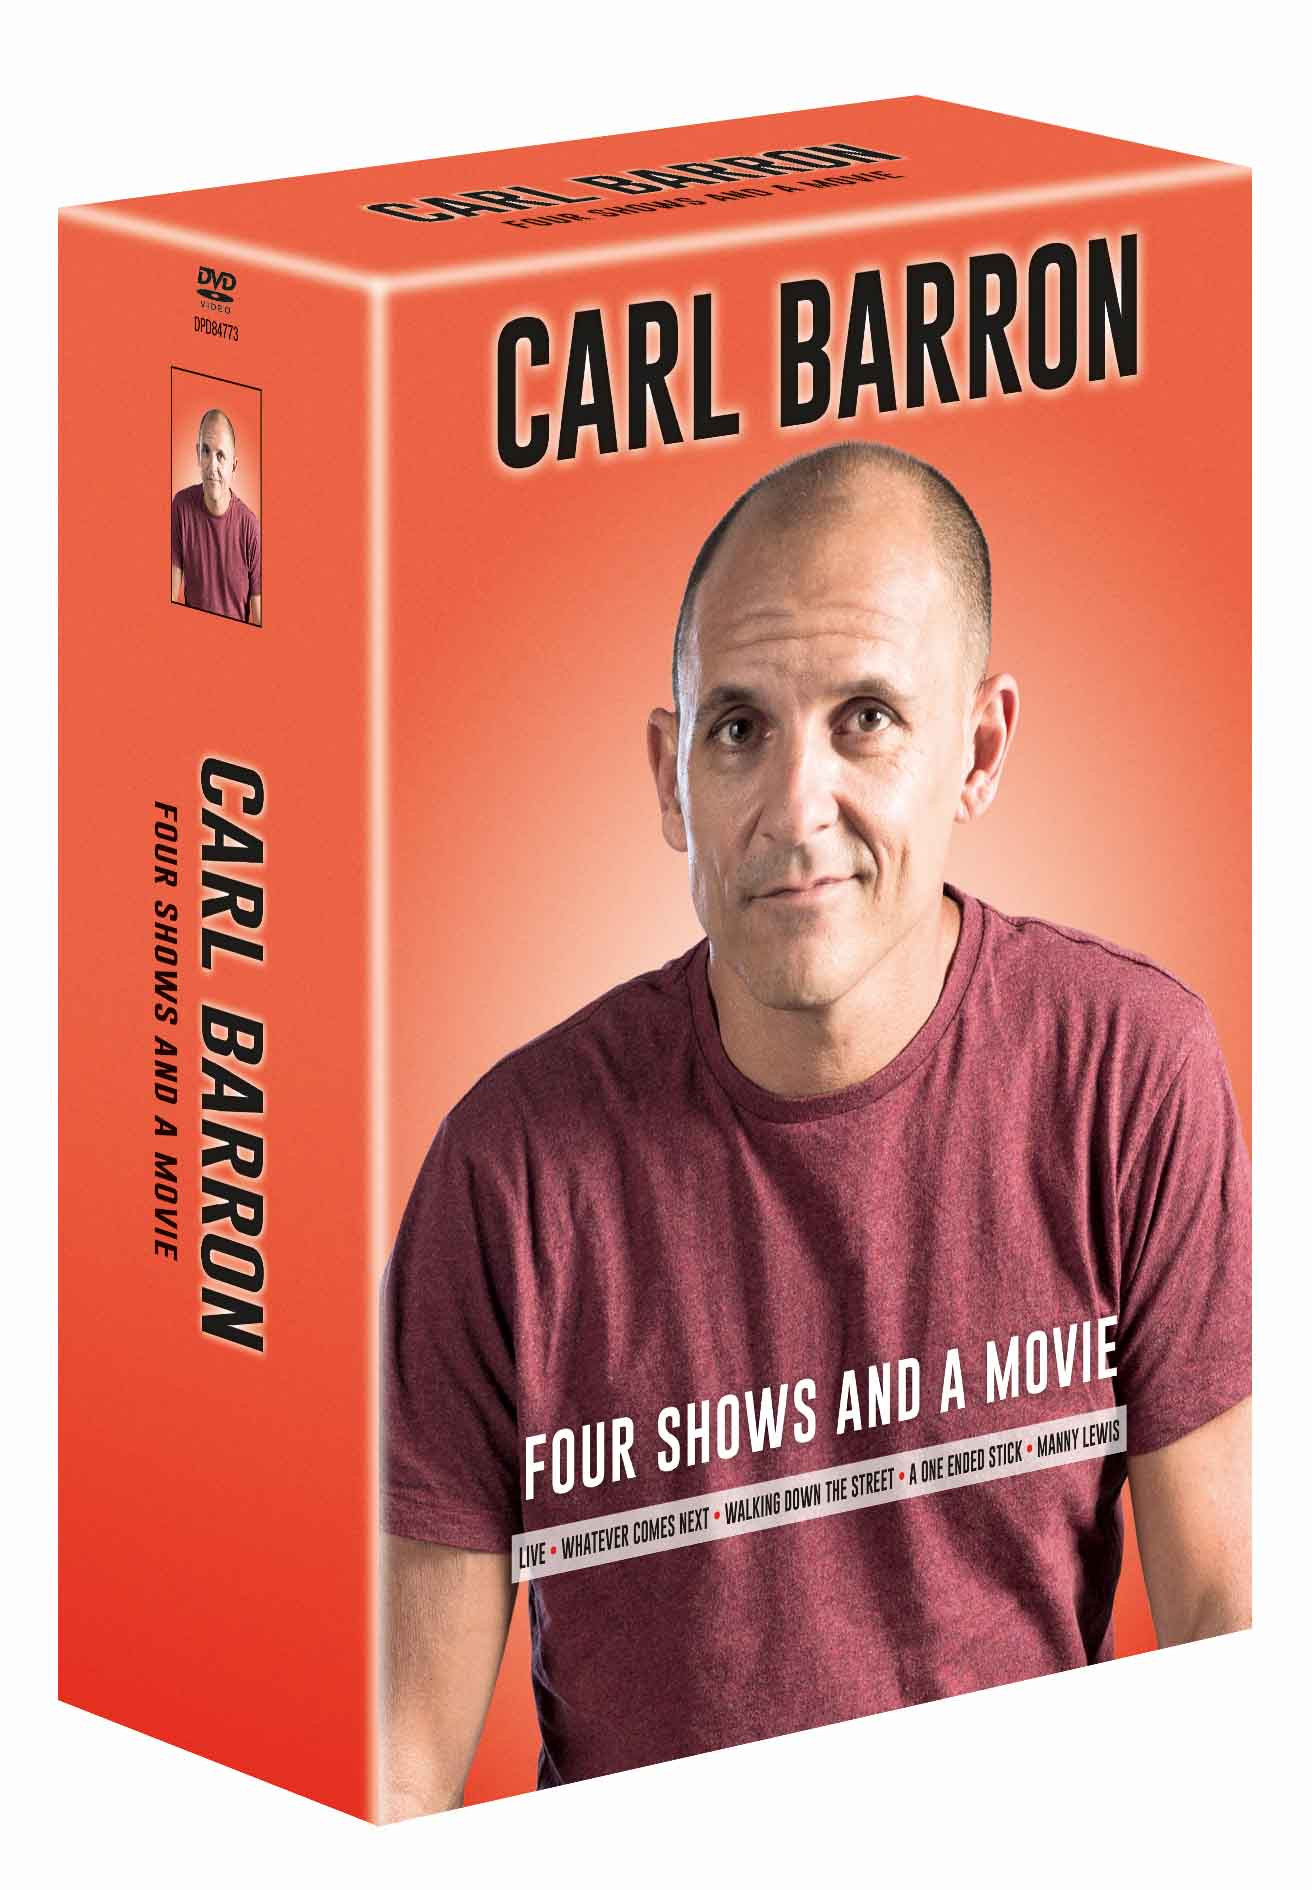  Carl Barron - Four Shows and a Movie DVD Set 